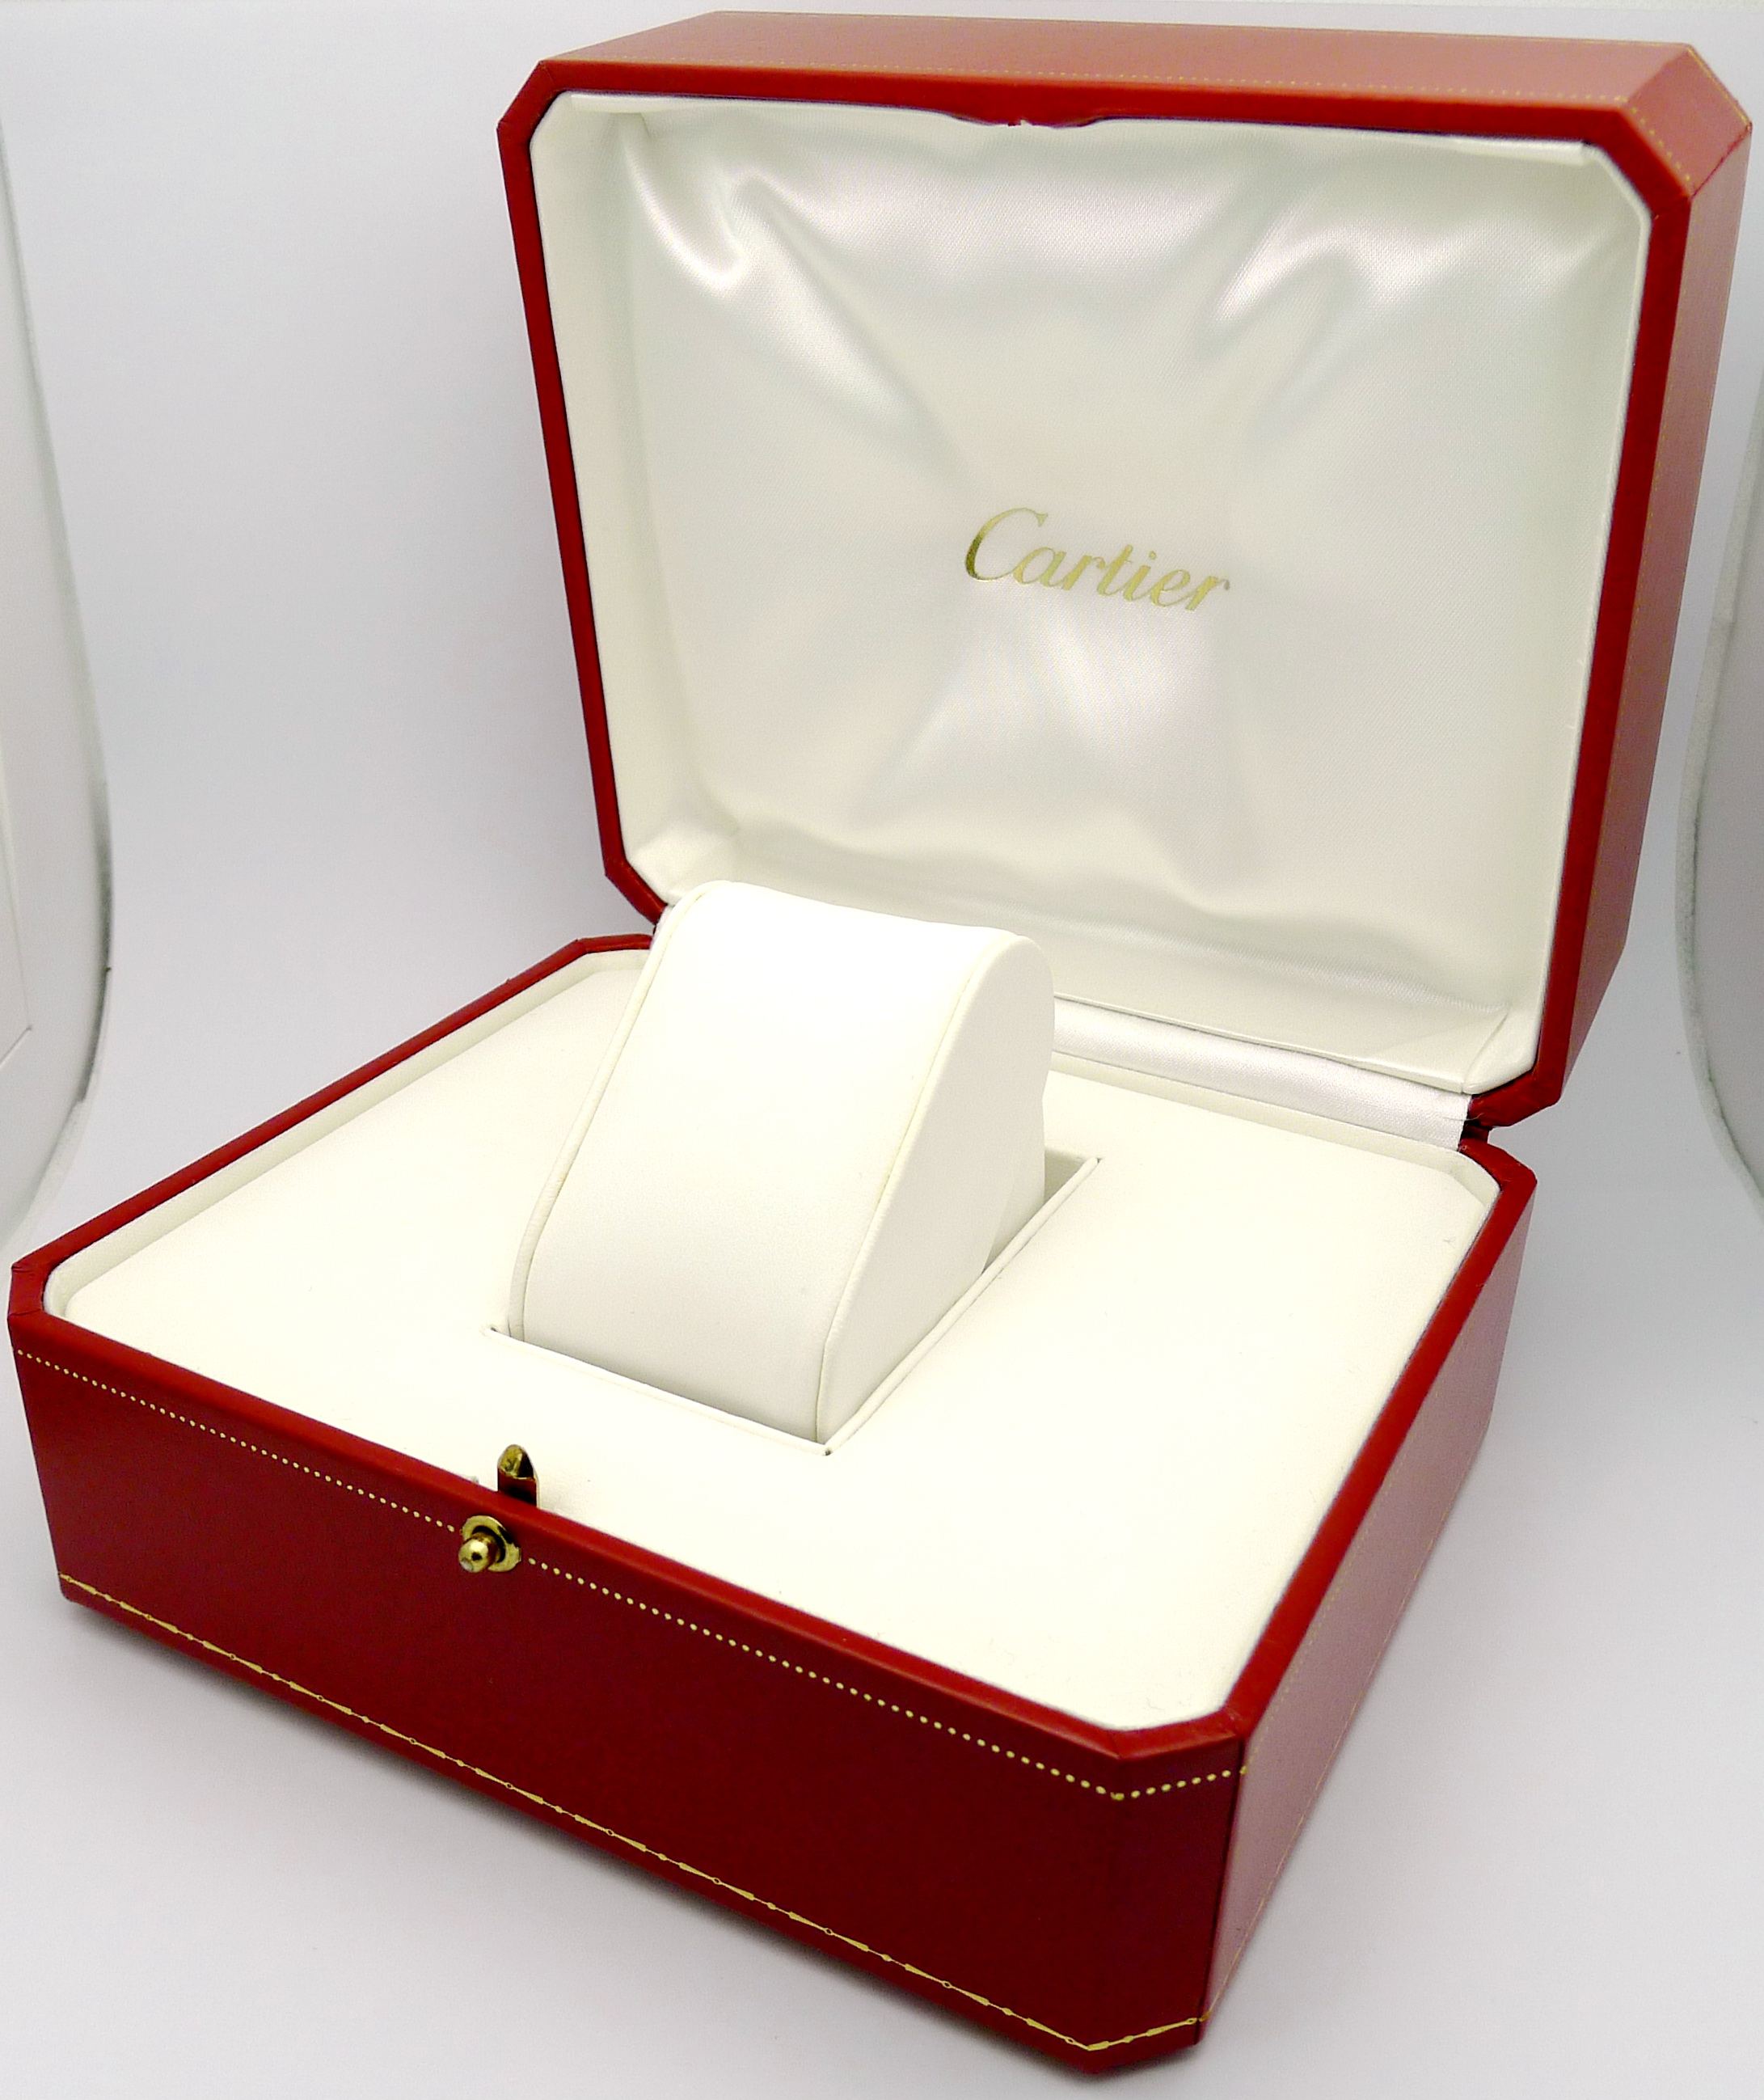 Cartier box